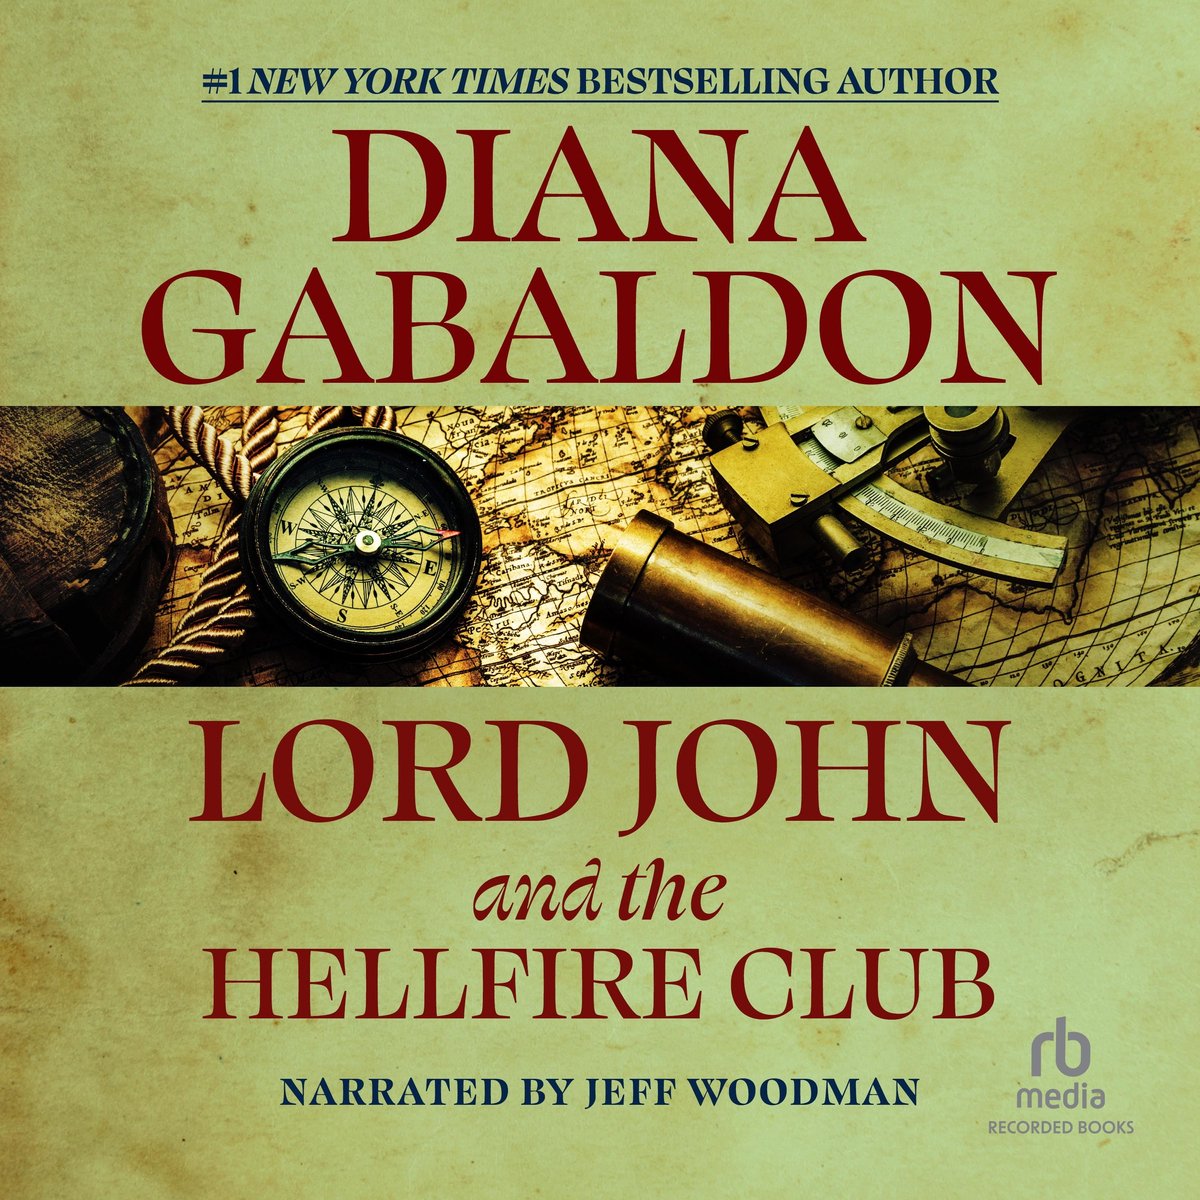 Lord John and the Hellfire Club - Diana Gabaldon